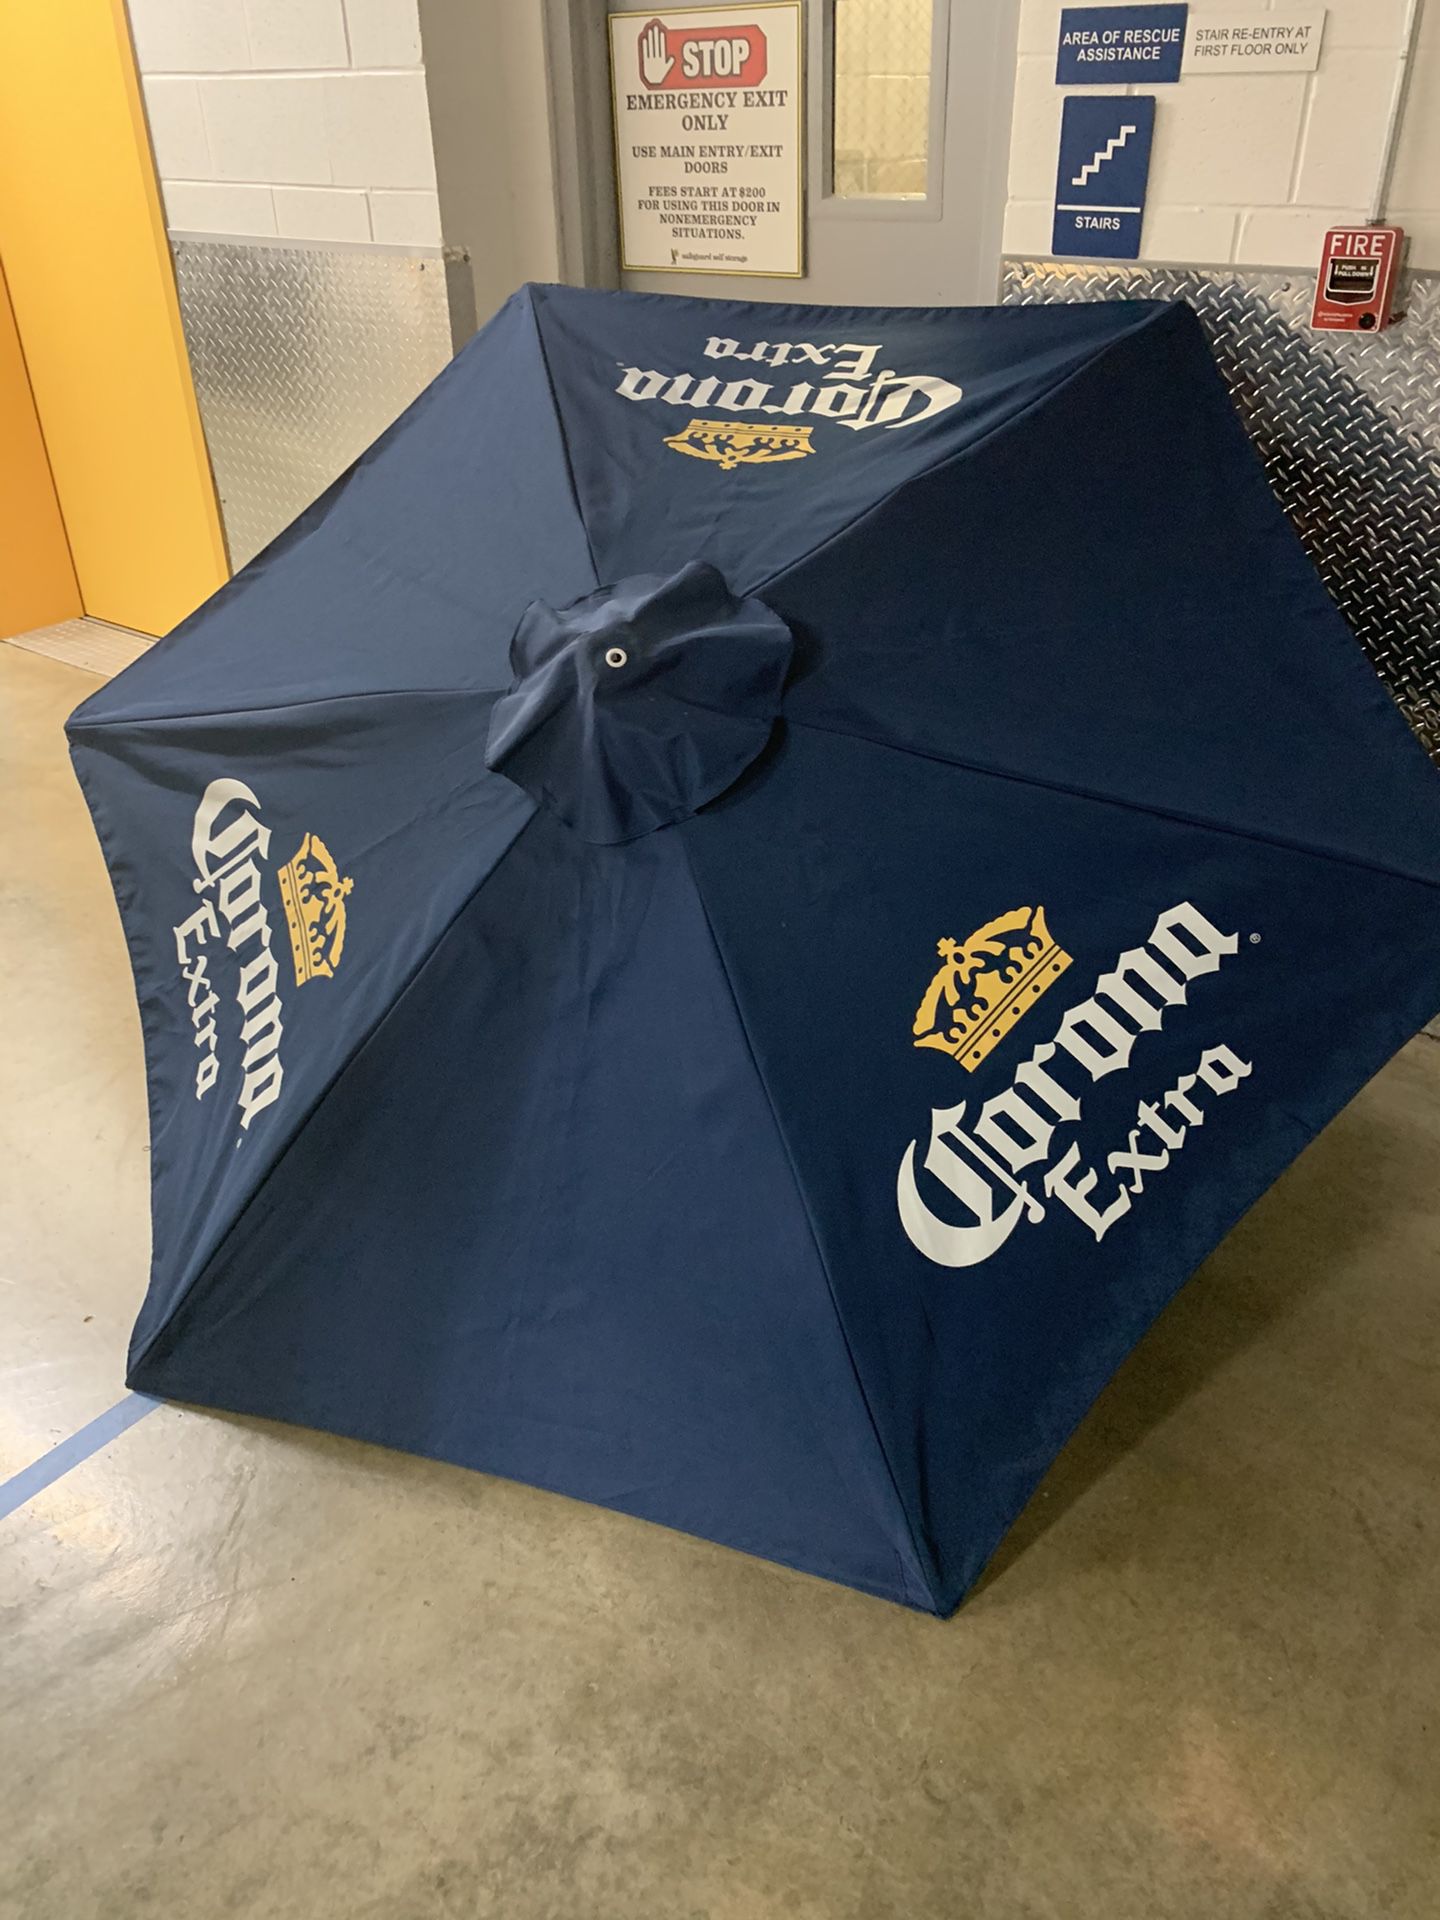 Corona patio umbrella